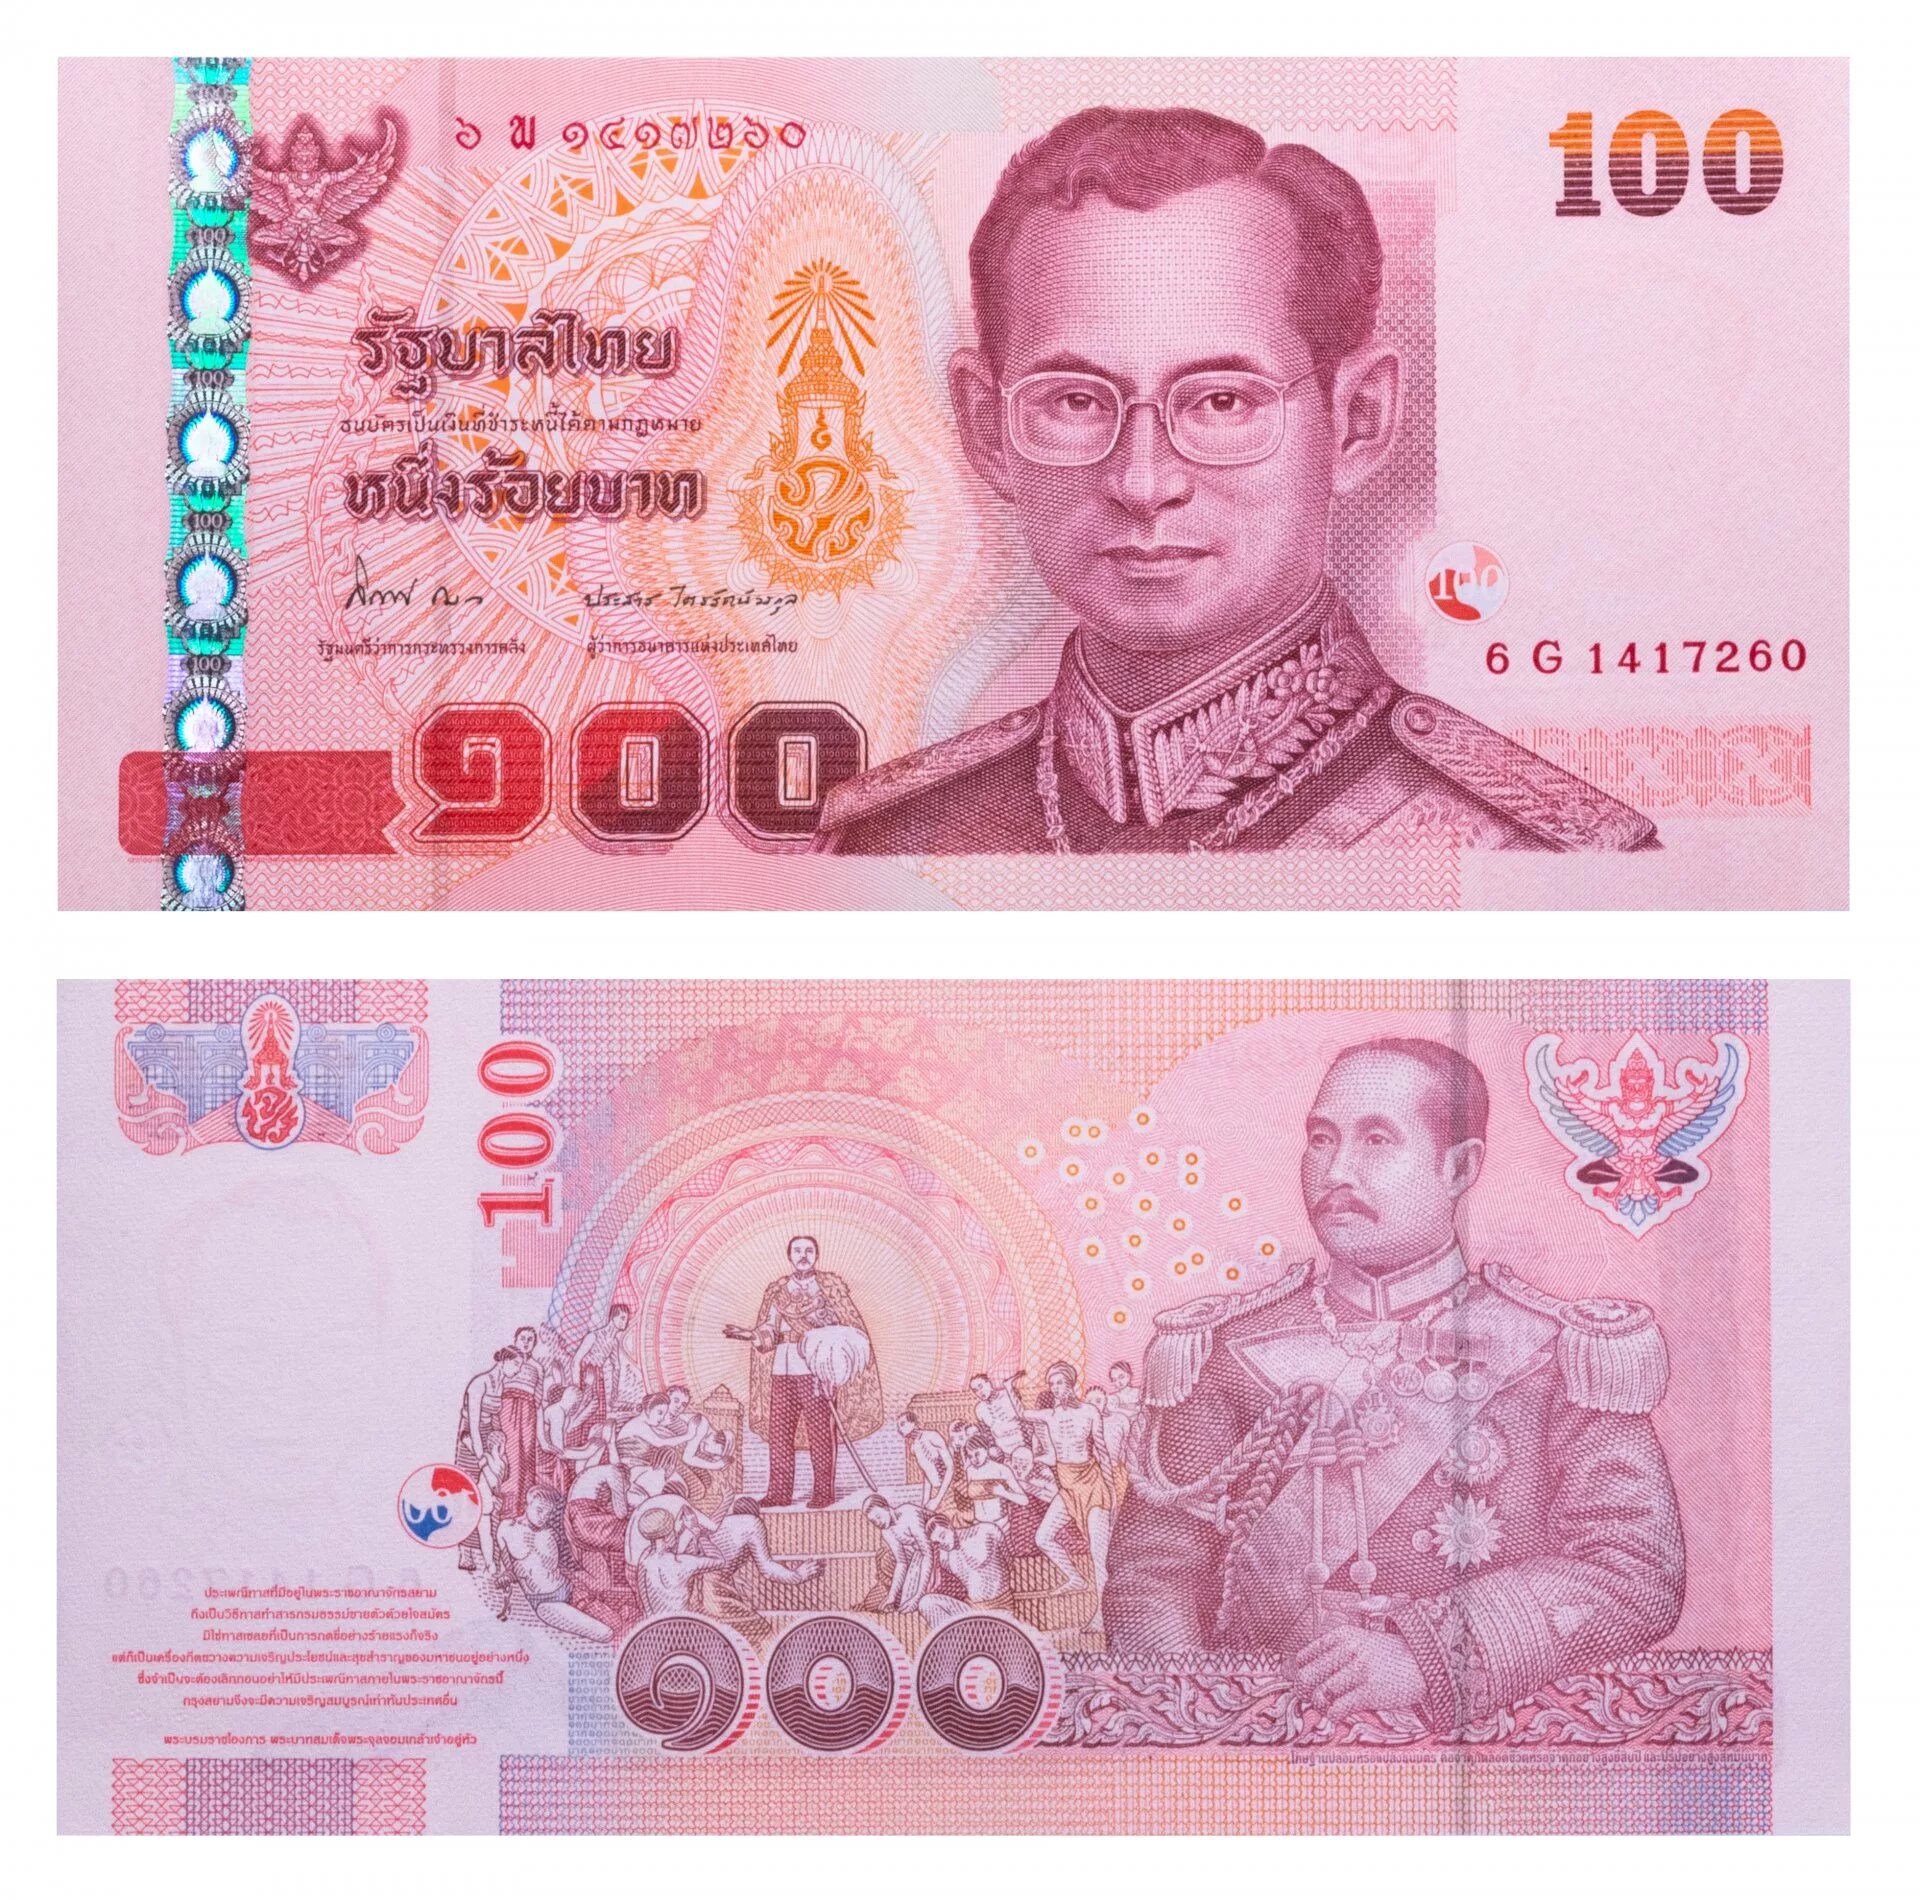 Купюра Тайланда 100 бат. Батт 100 купюра бат. Тайская купюра 100 бат. Банкноты Таиланда 100 бат в рублях.